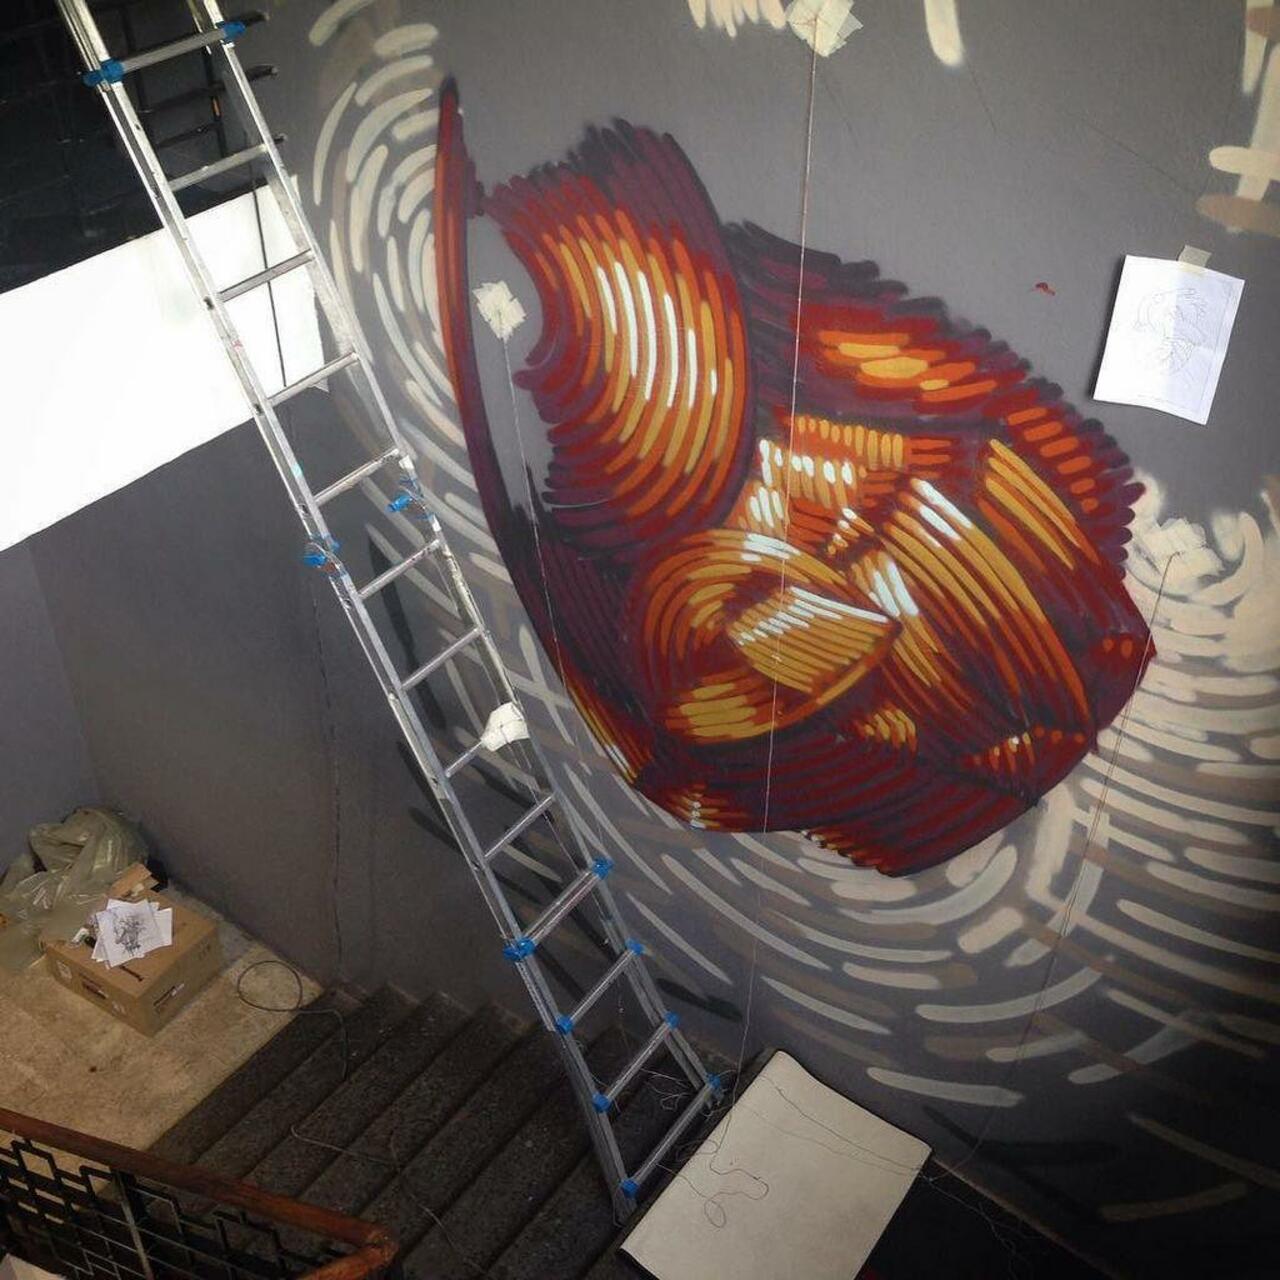 RT @artpushr: via #mach505_trulydesign "http://bit.ly/1G2ijwy" #graffiti #streetart http://t.co/KRQJiI8XNk